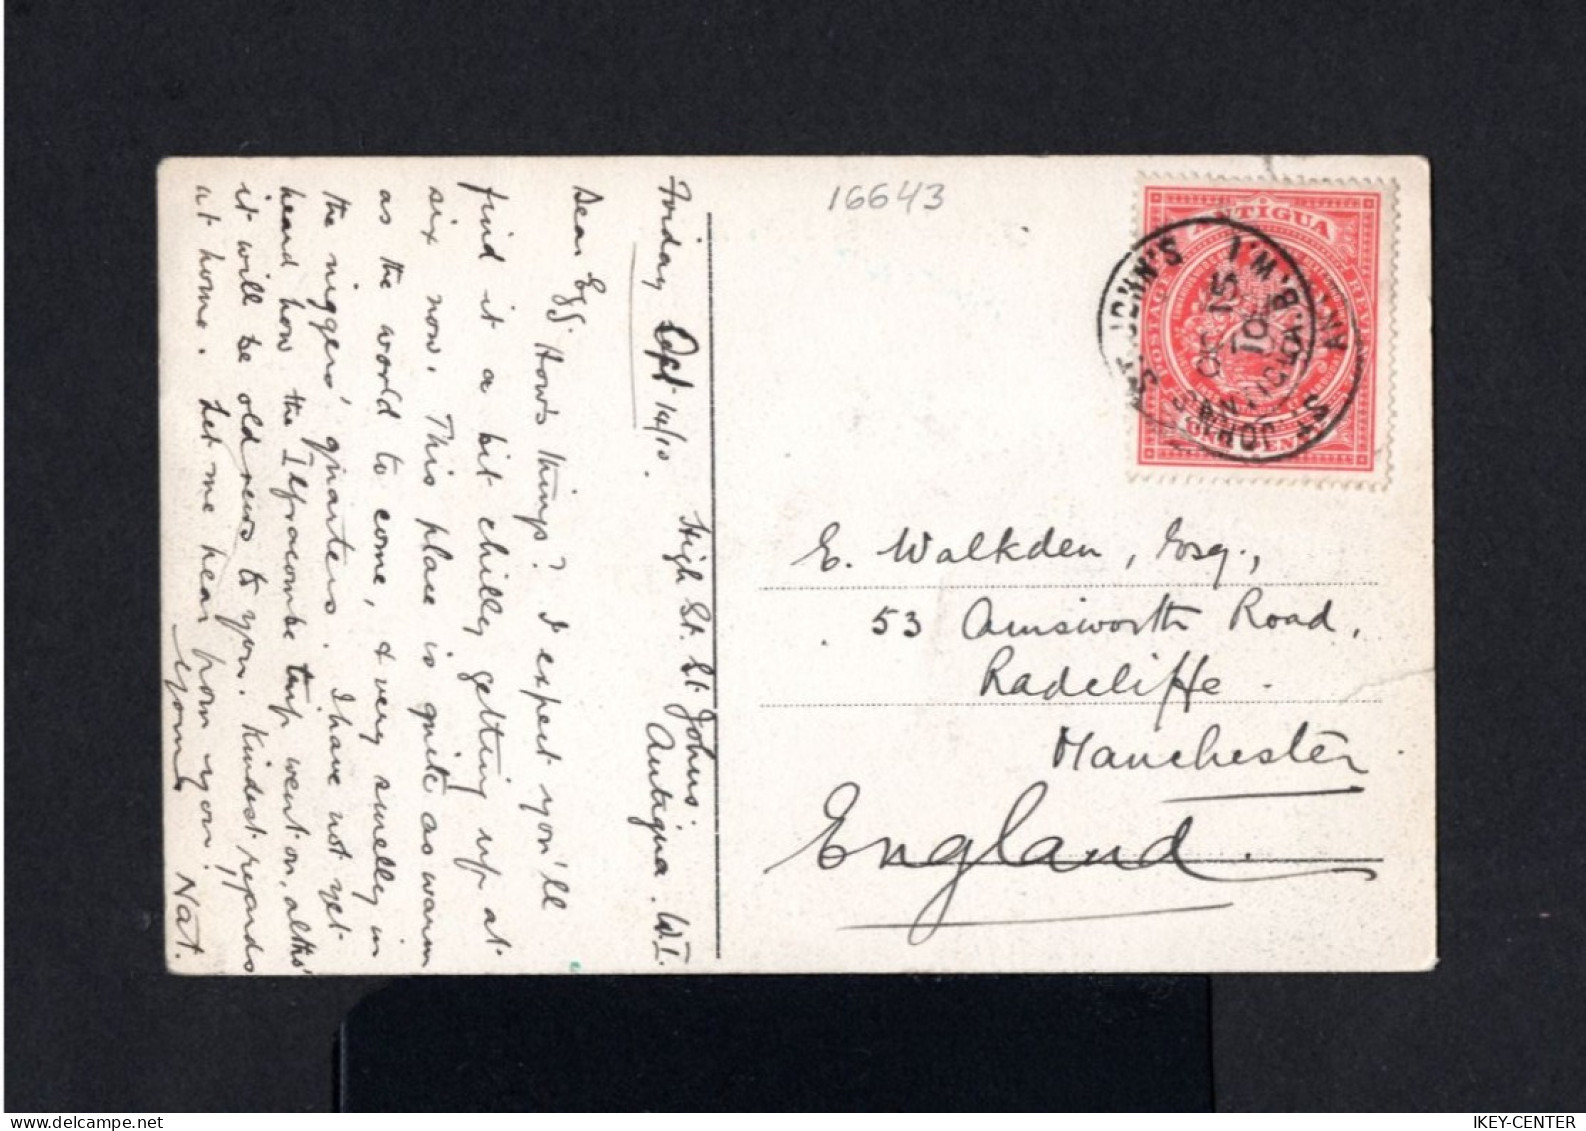 16643-ANTIGUA-.OLD POSTCARD ST.JOHN'S To MANCHESTER (england) 1910.Carte Postale.POSTKARTE.British ANTIGUA. - 1858-1960 Crown Colony